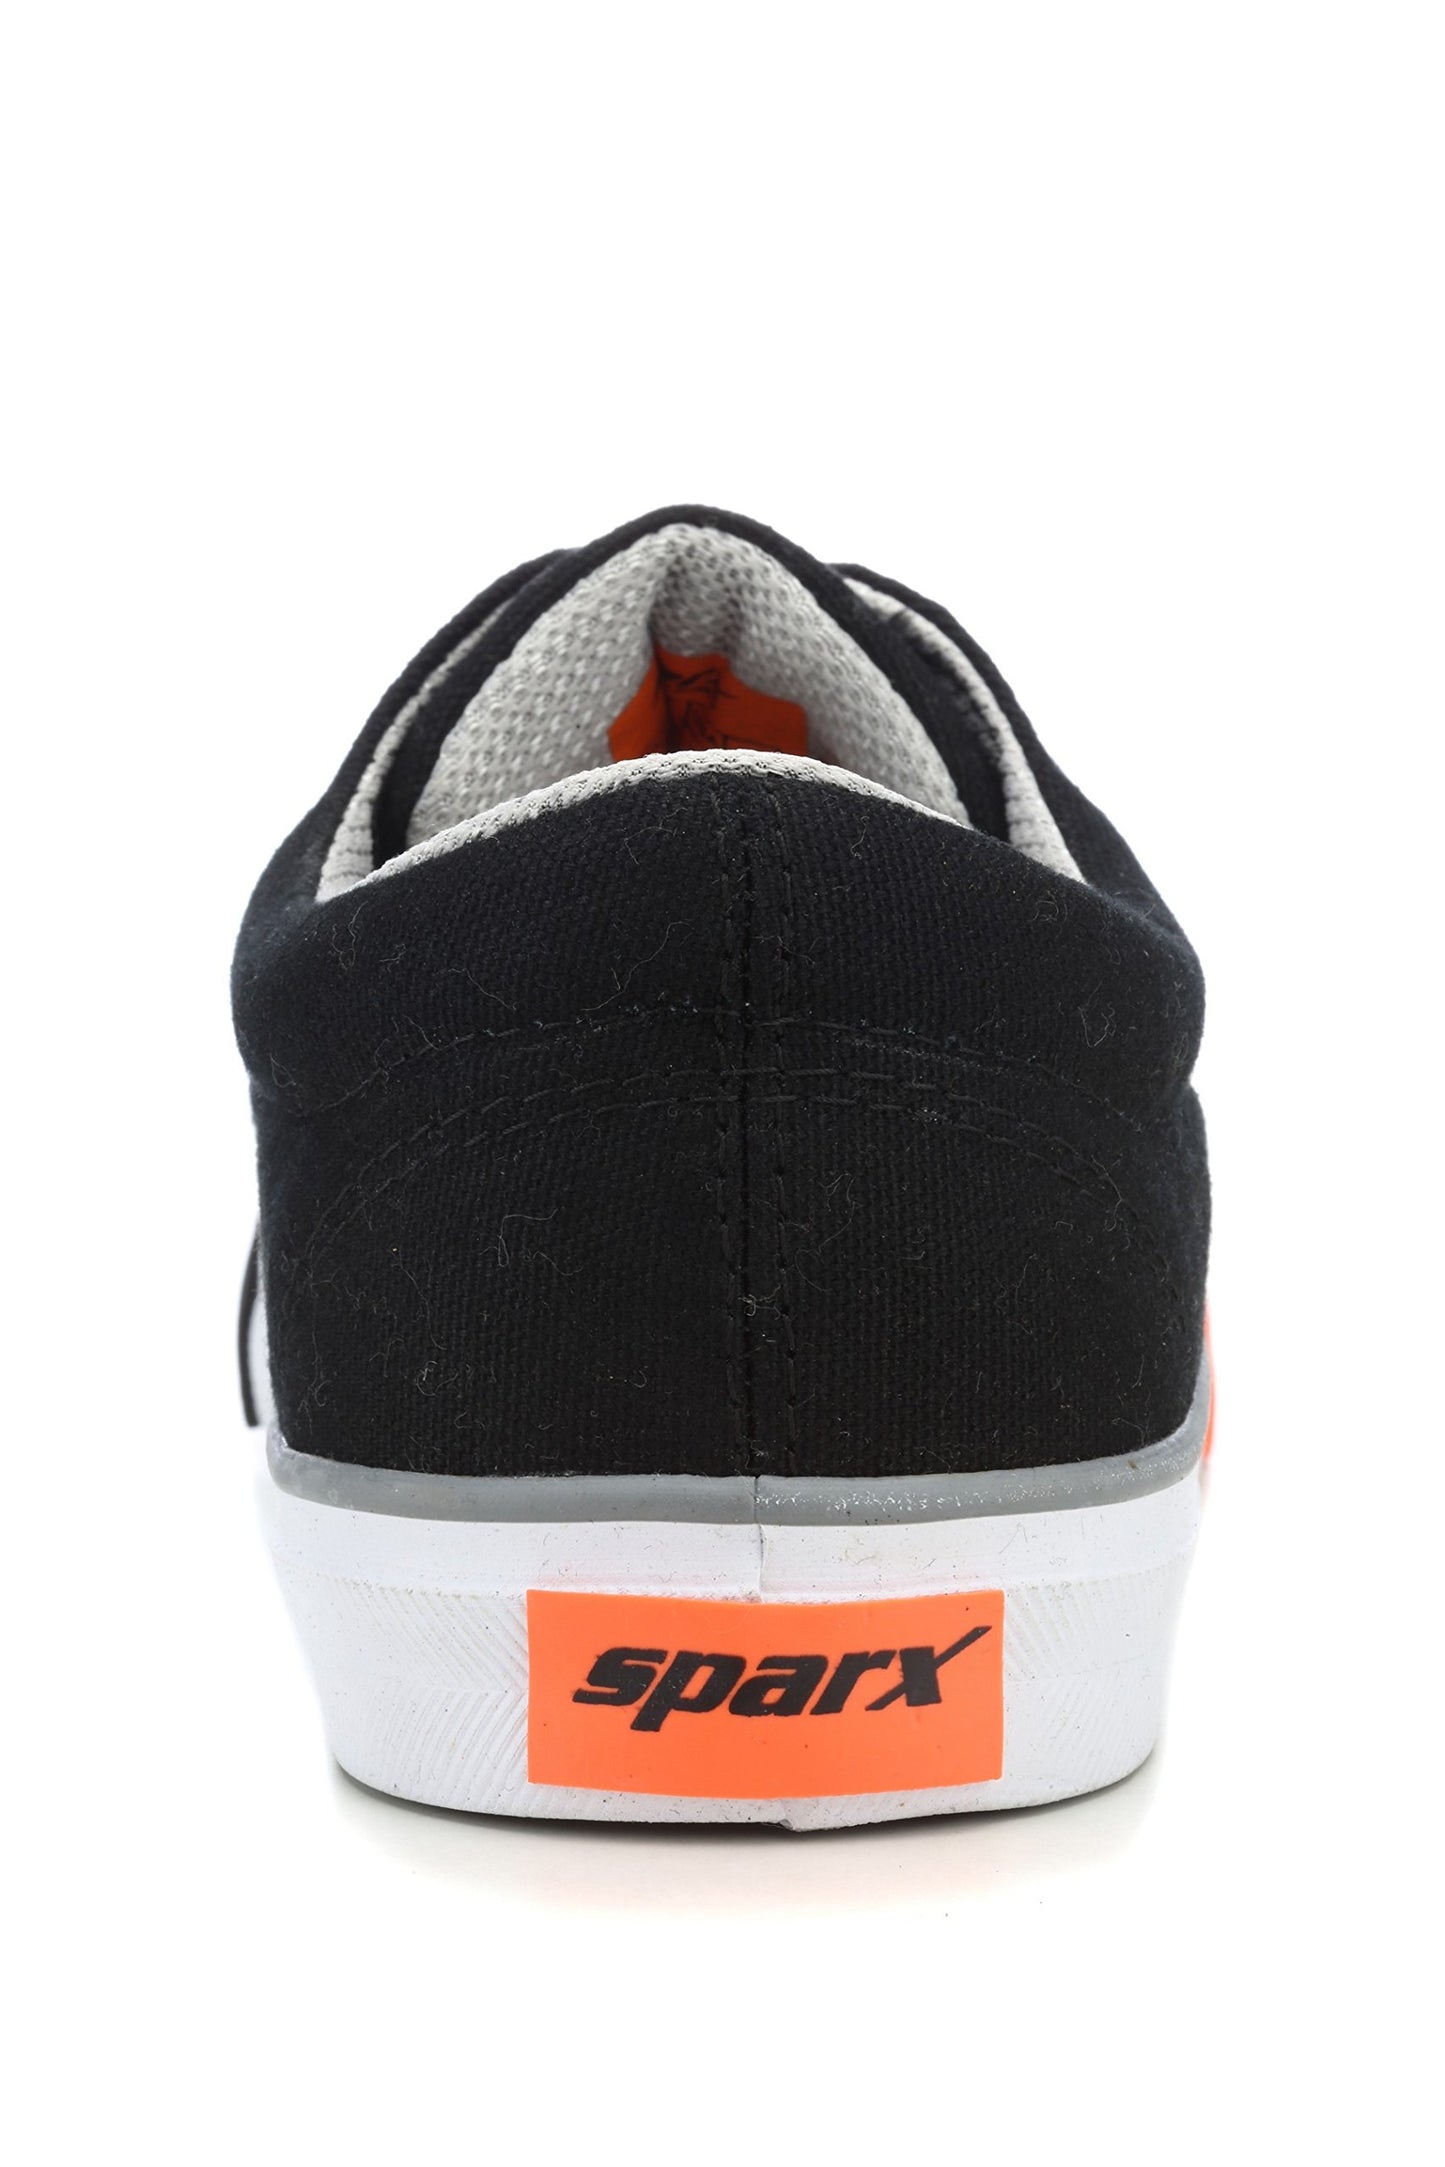 Sparx mens Black Casual Shoe